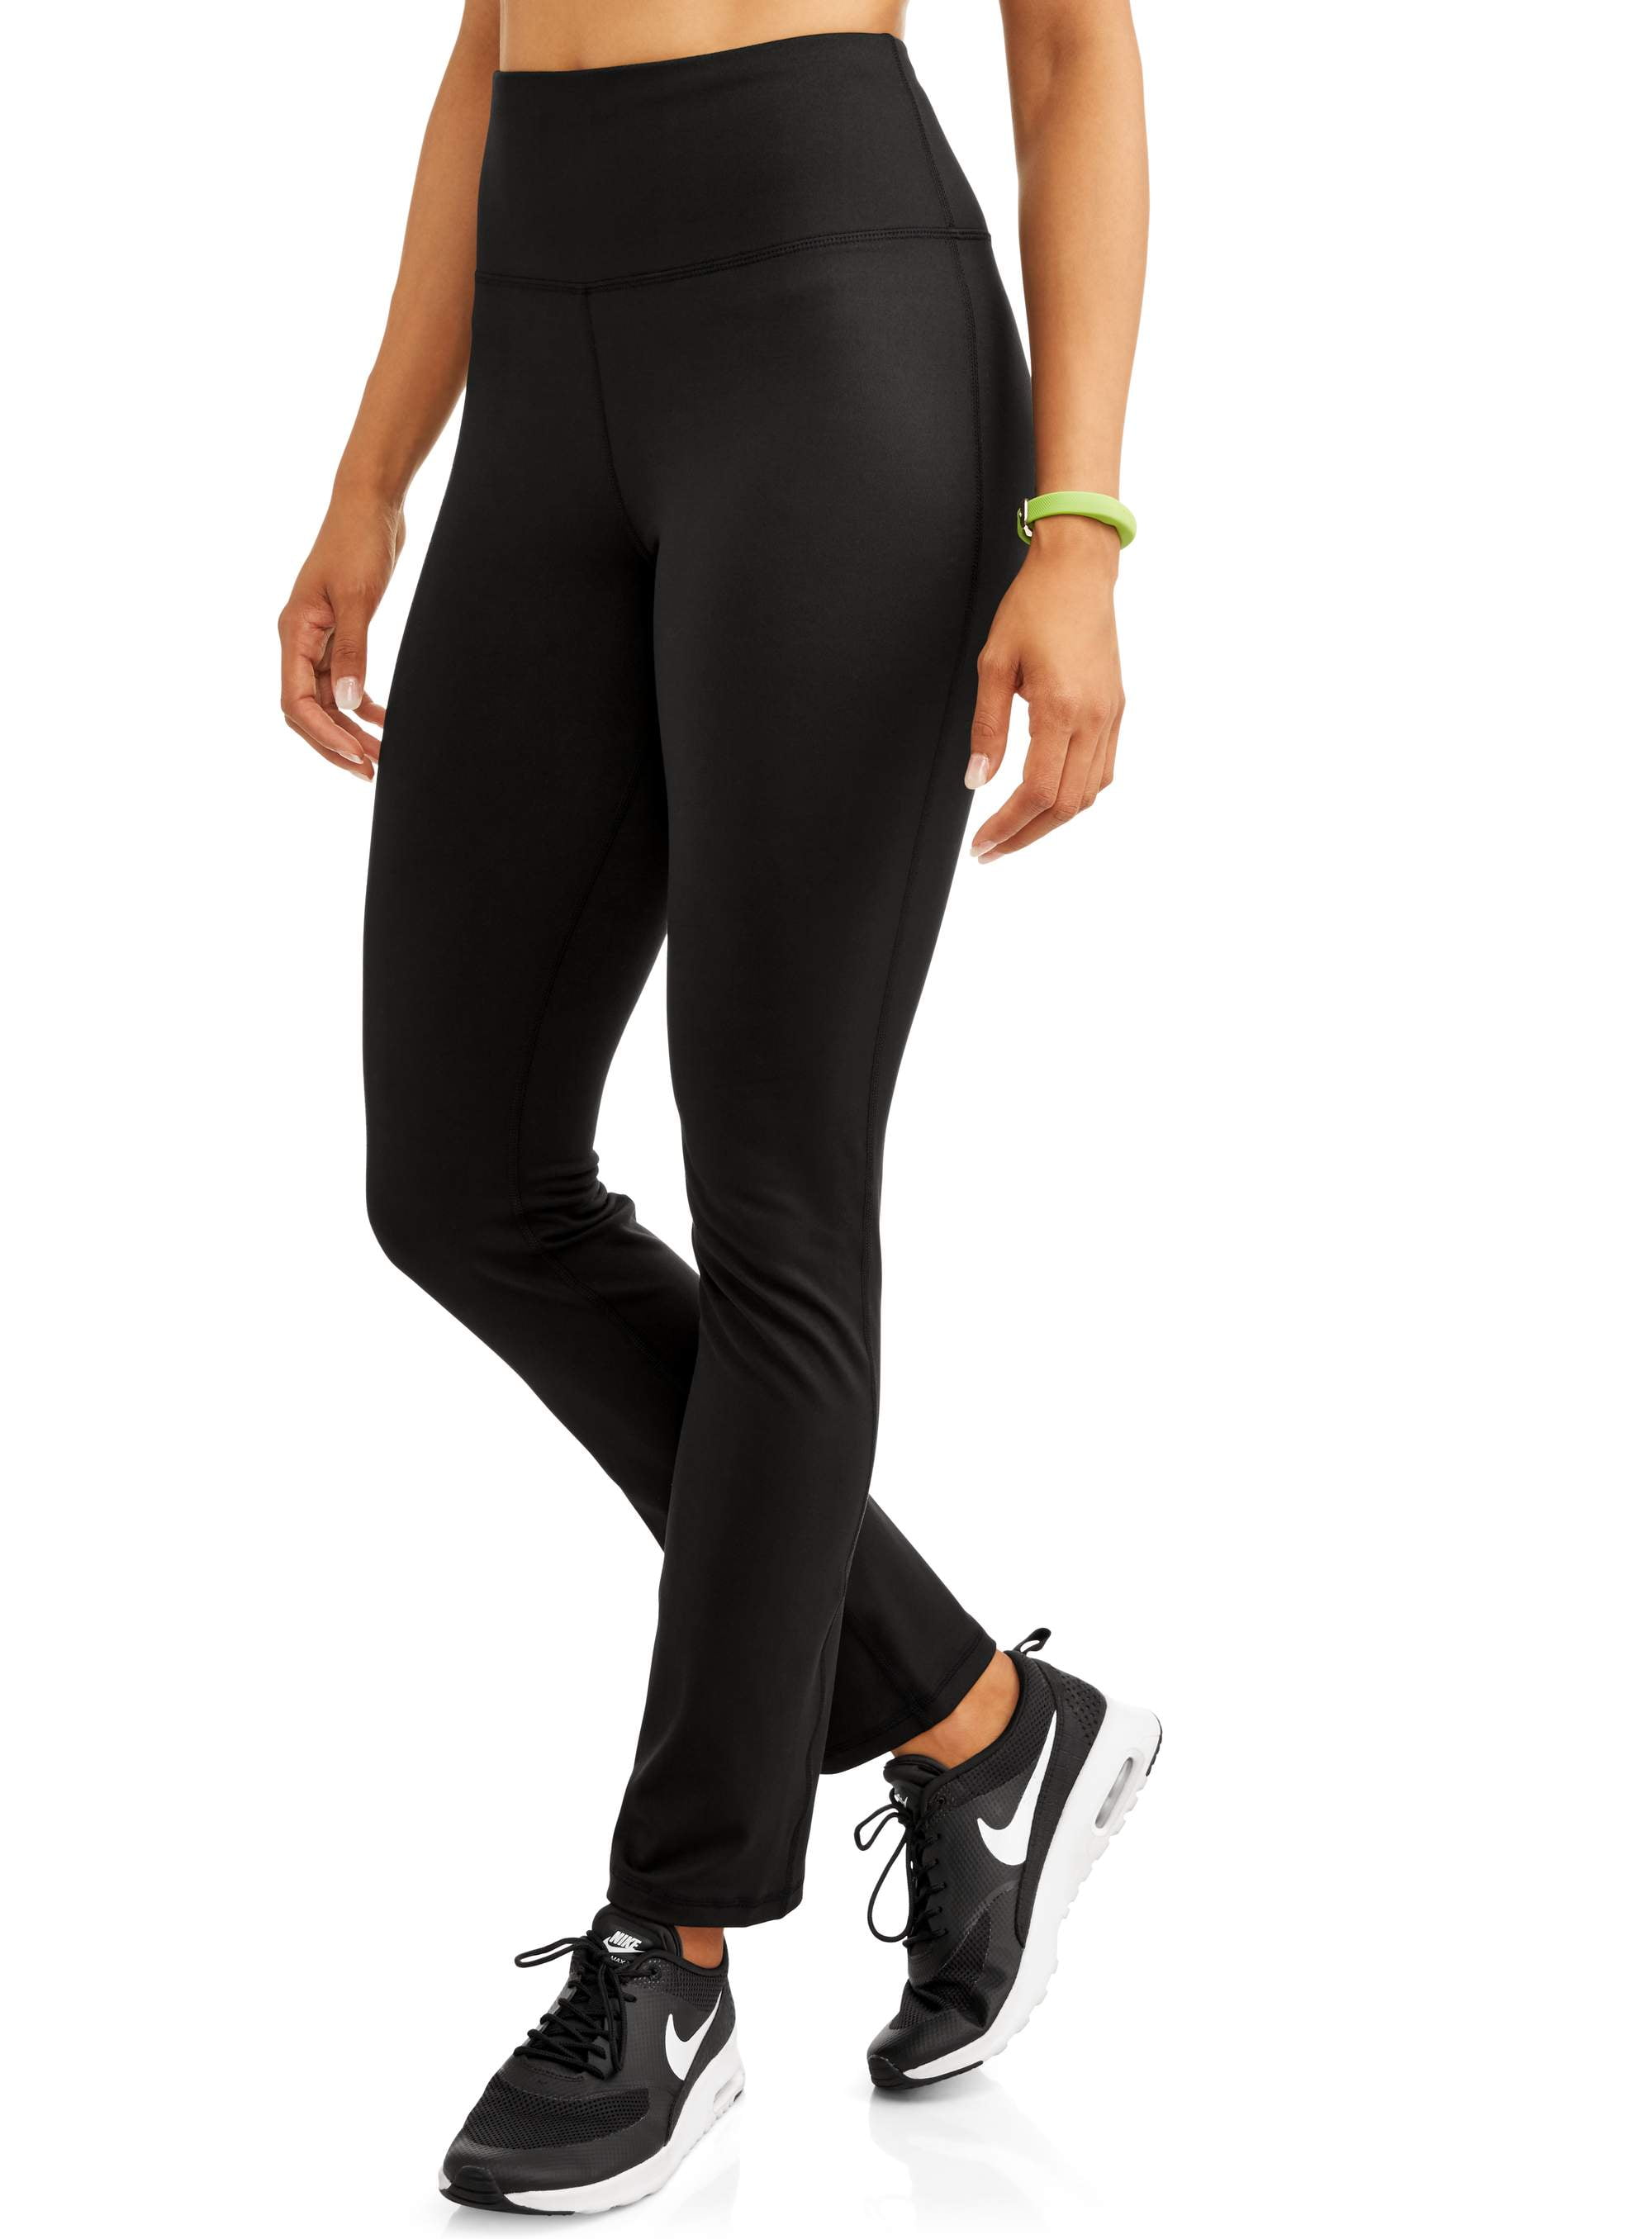 Dermawear Women's Activewear Track Pants | Yoga Pants